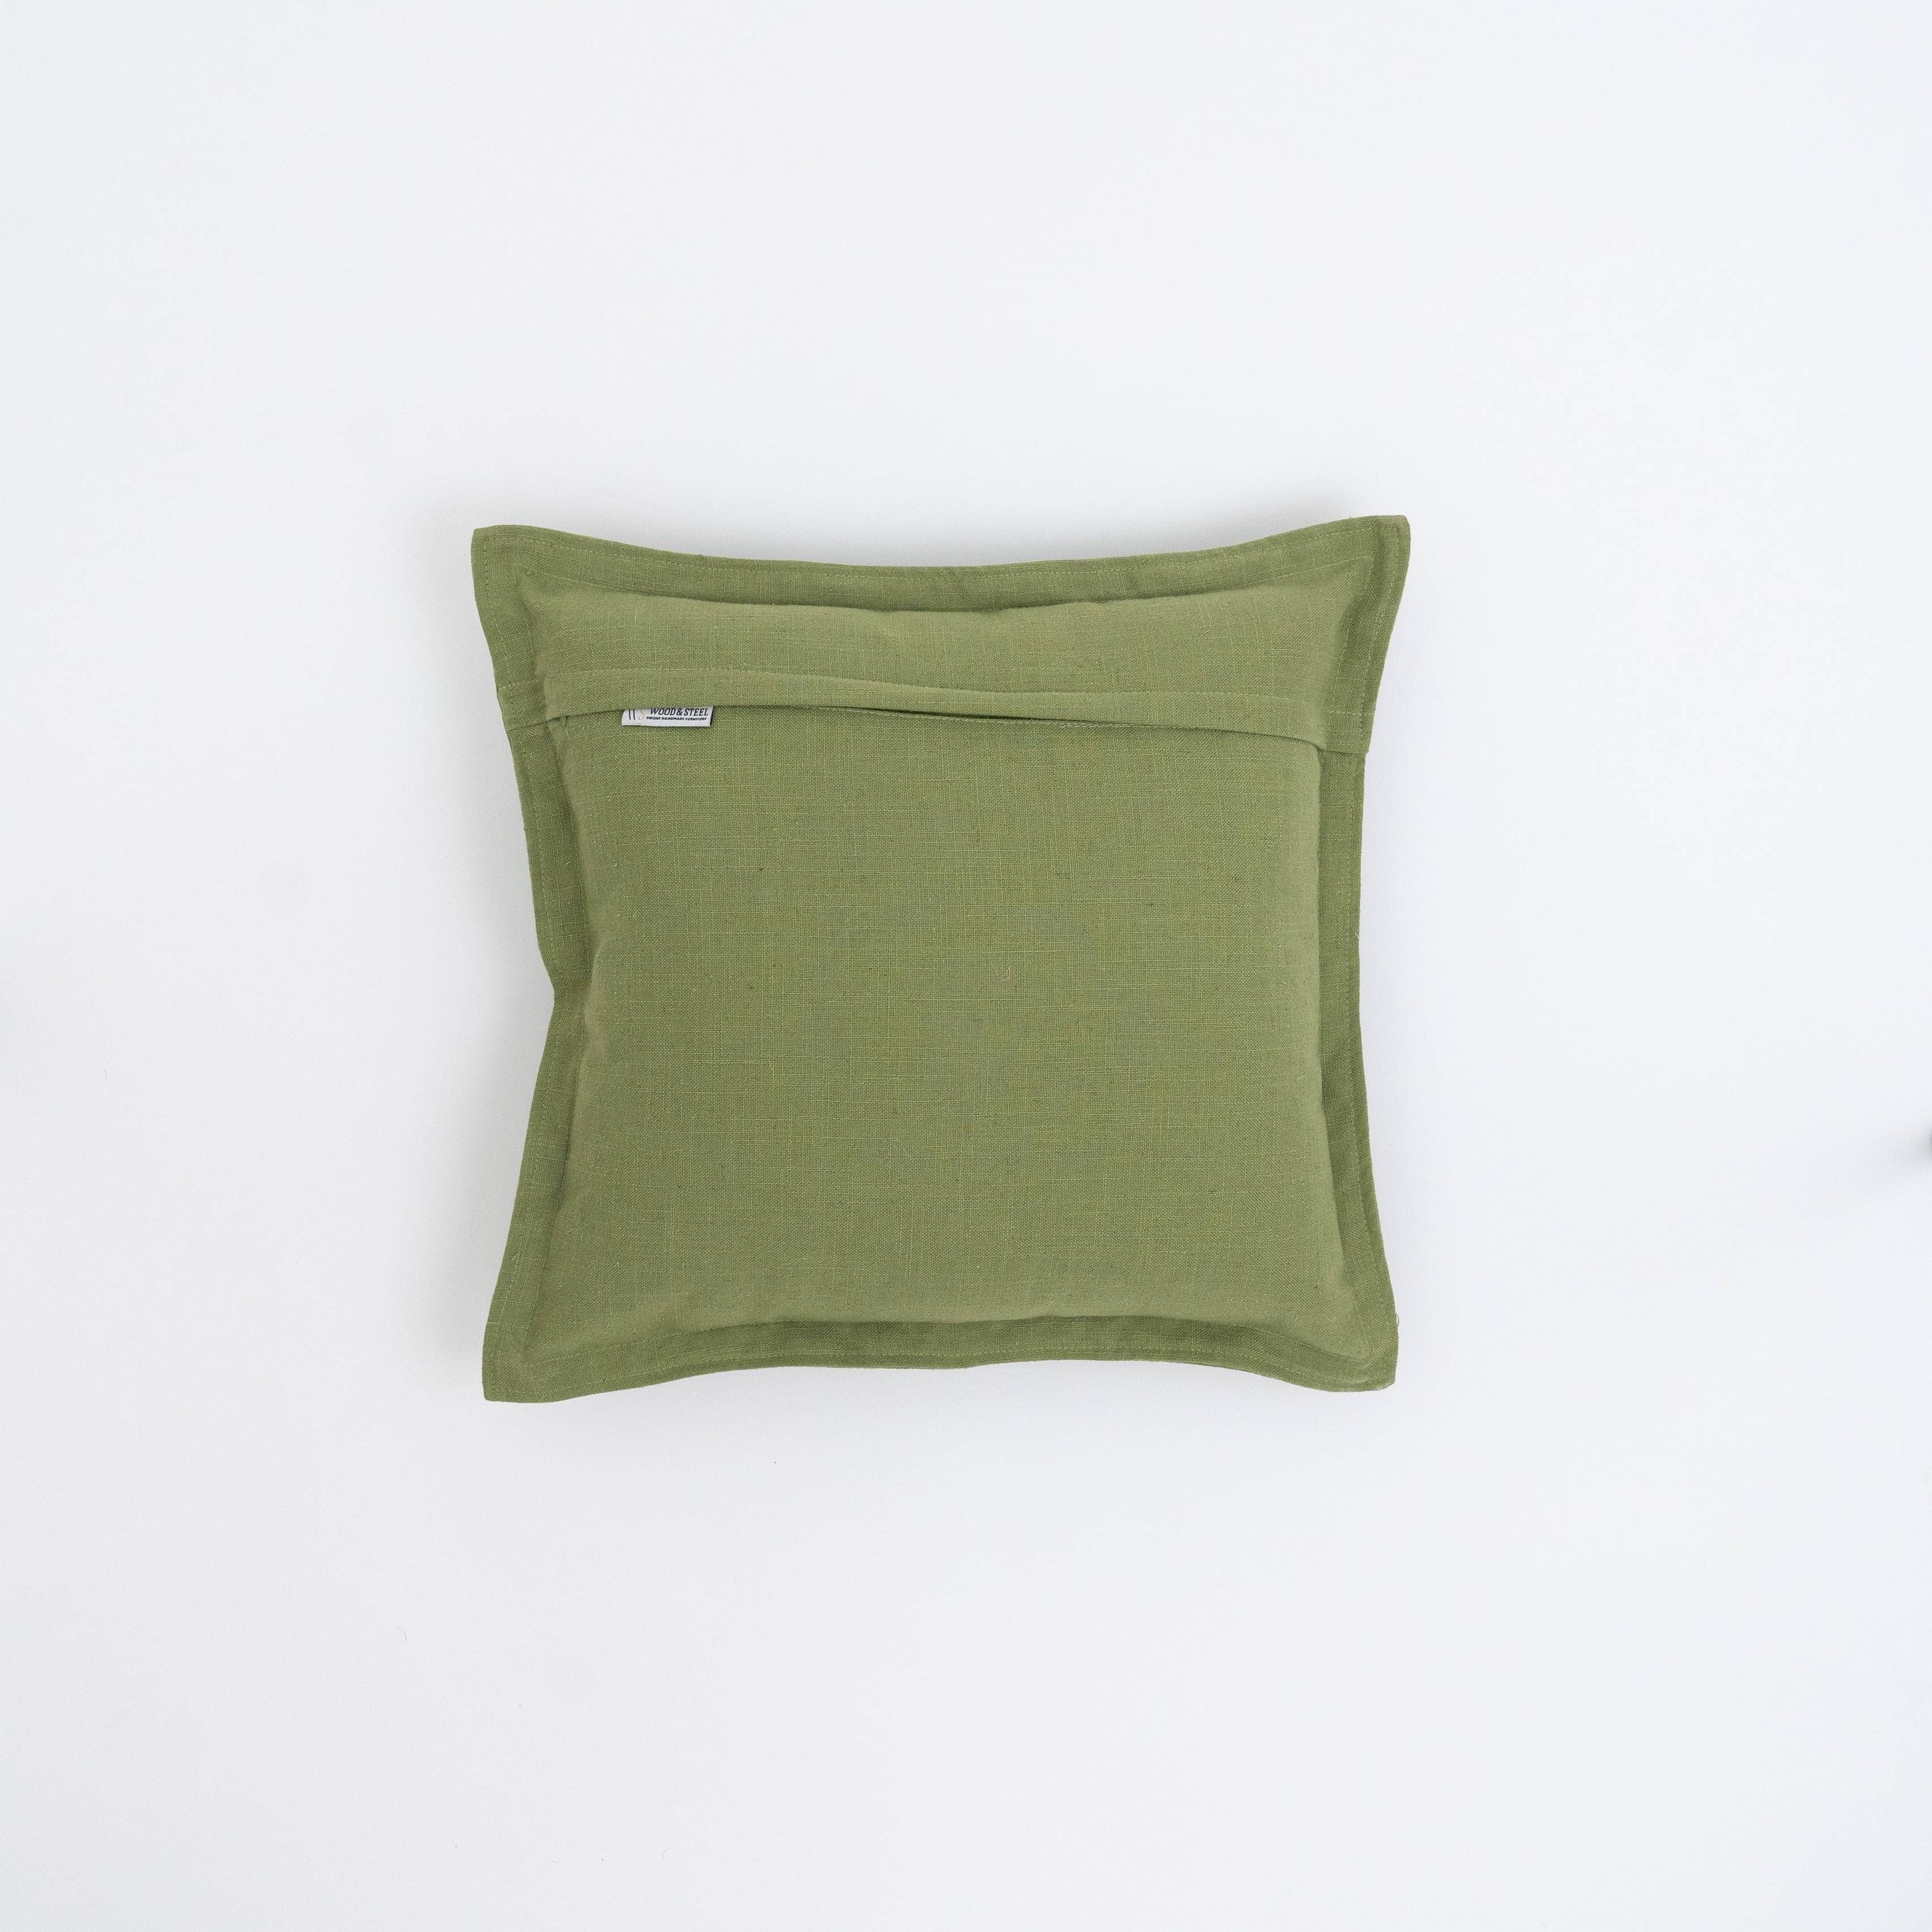 Cushion Cover Green 45 x45cm  - WS Living - UAE - Cushions Wood and steel Furnitures - Dubai